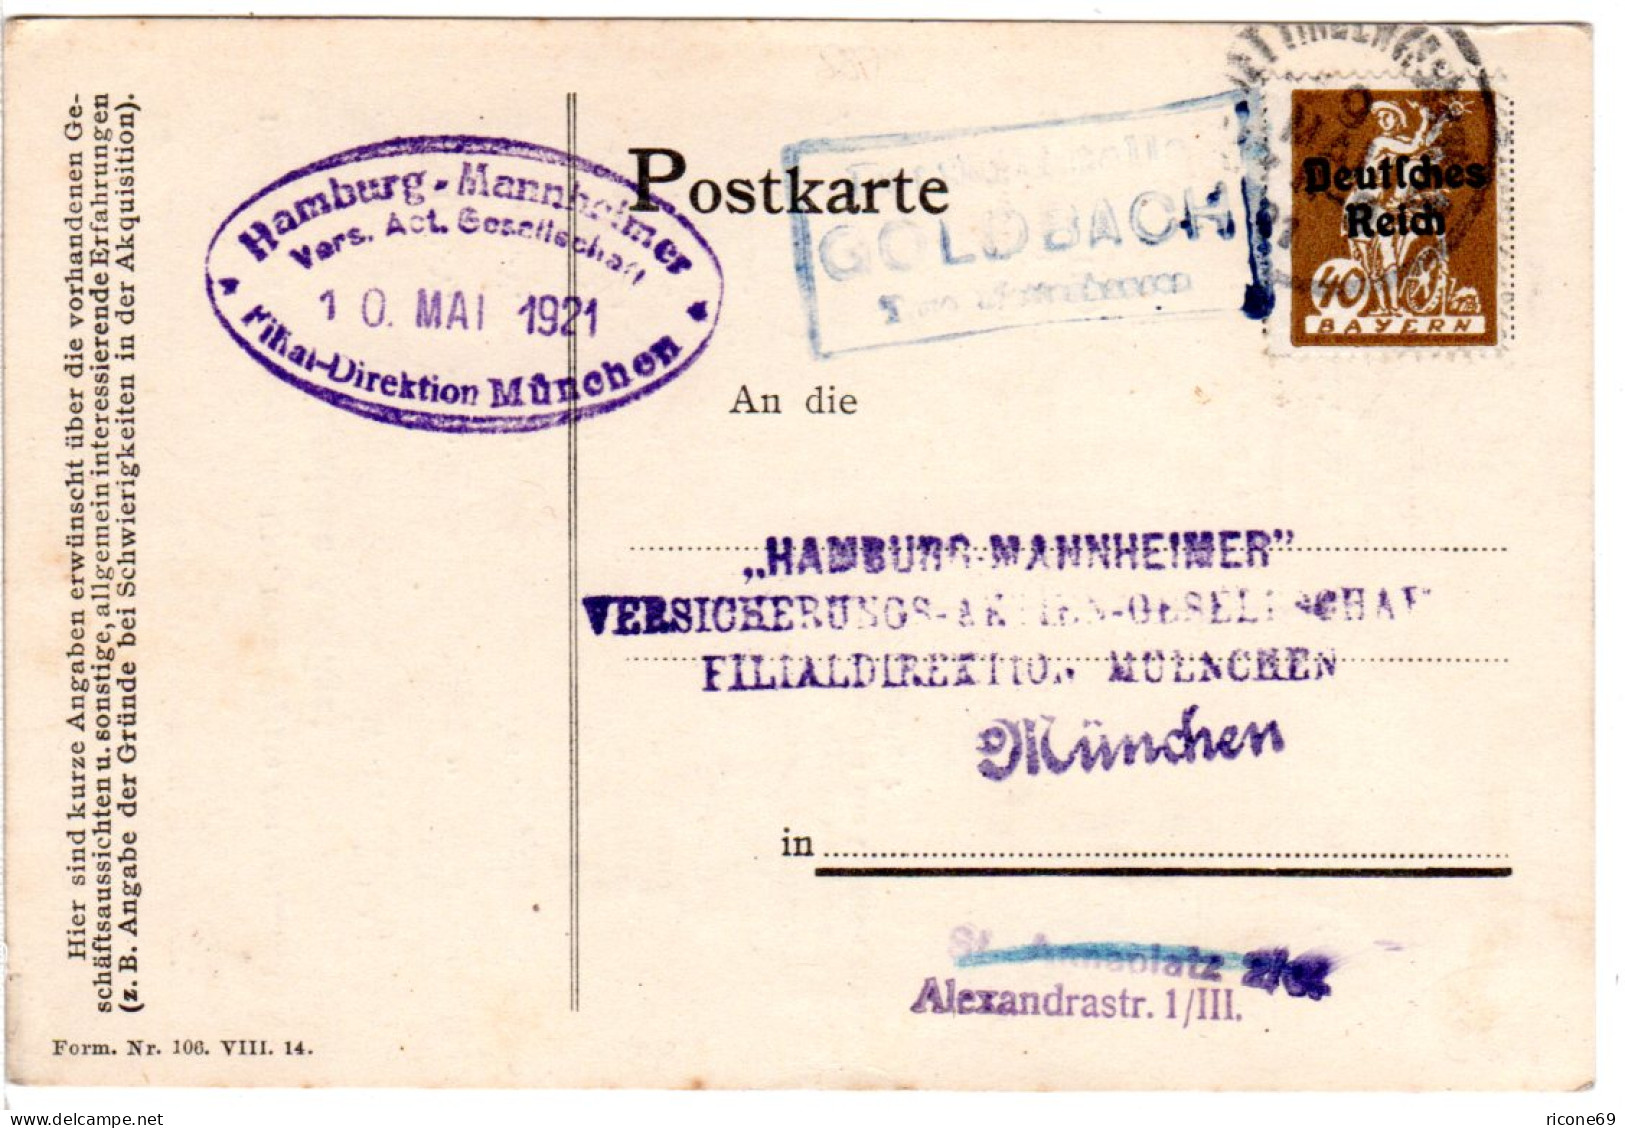 DR 1921, Bayern Posthilfstelle GOLDBACH Taxe Wellenhausen Auf Karte M. 40 Pf.  - Covers & Documents